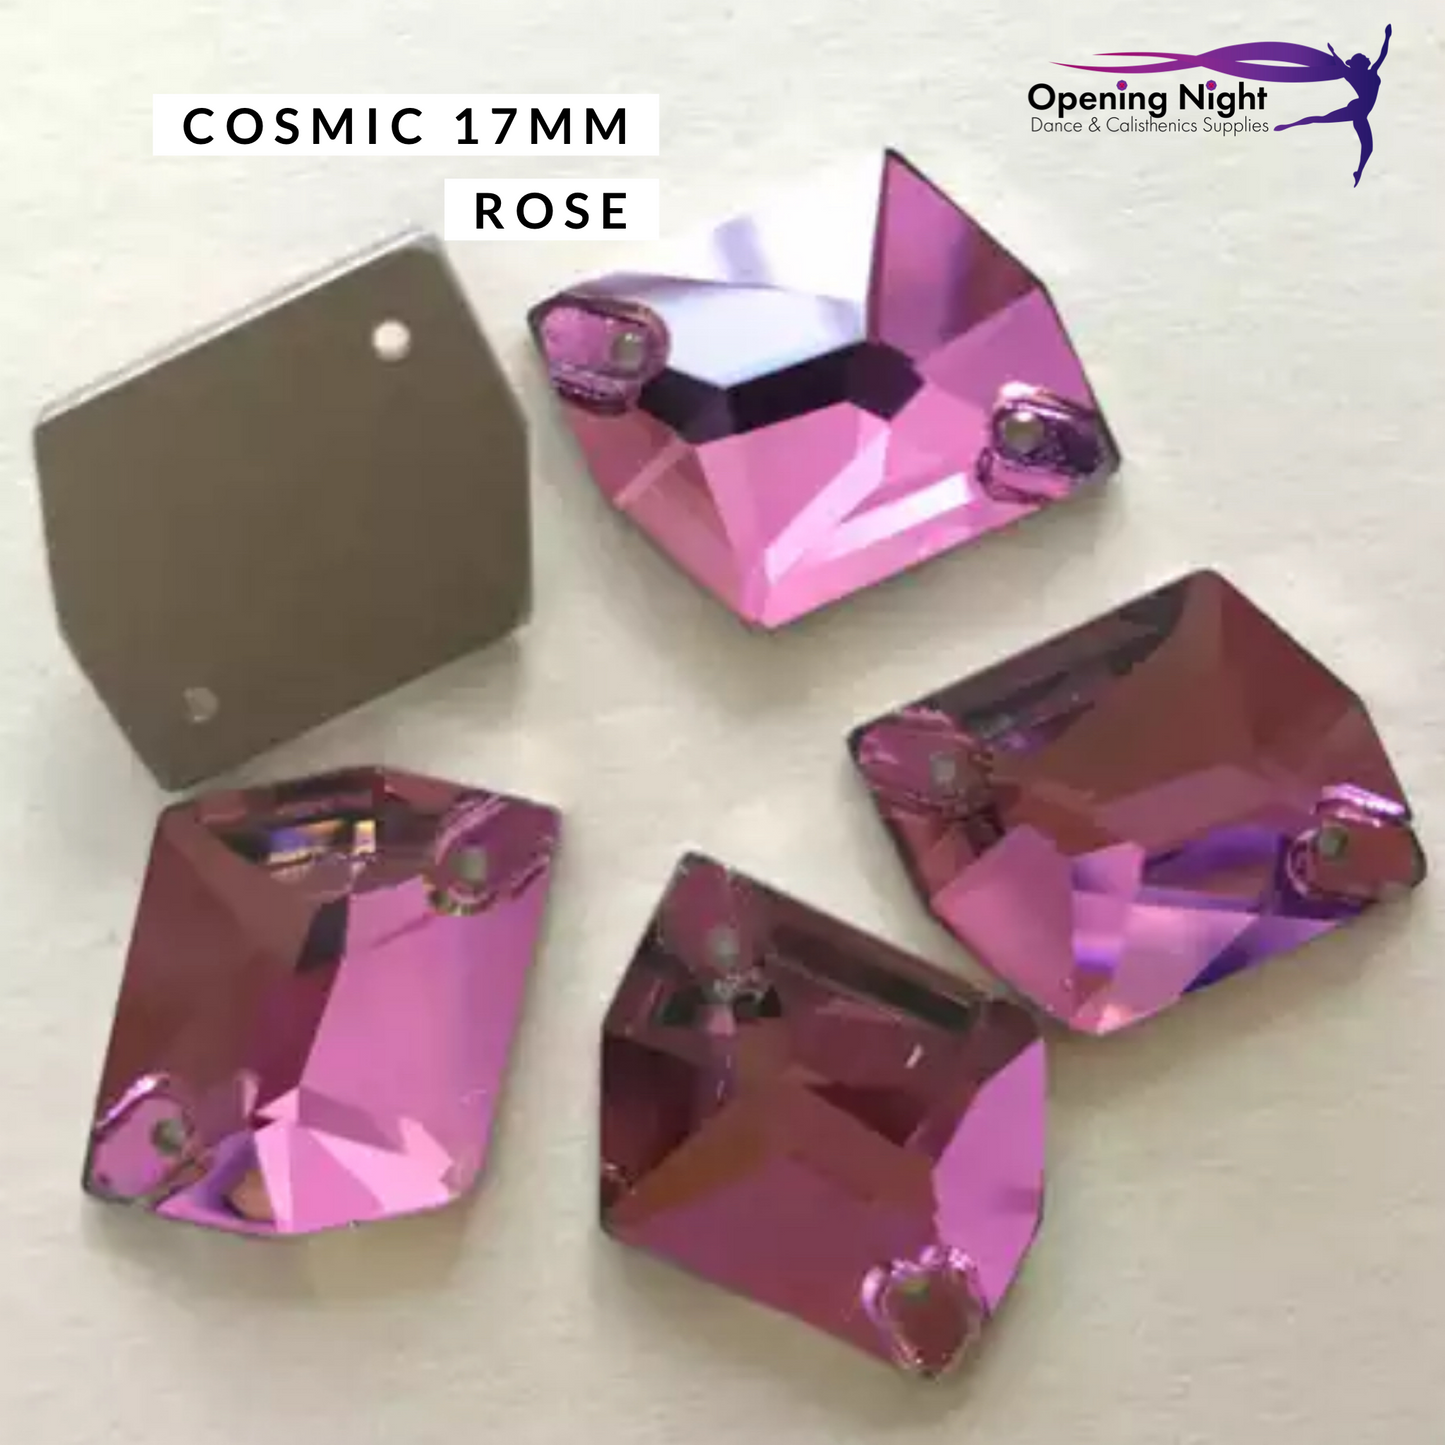 Cosmic 17mm, Rose